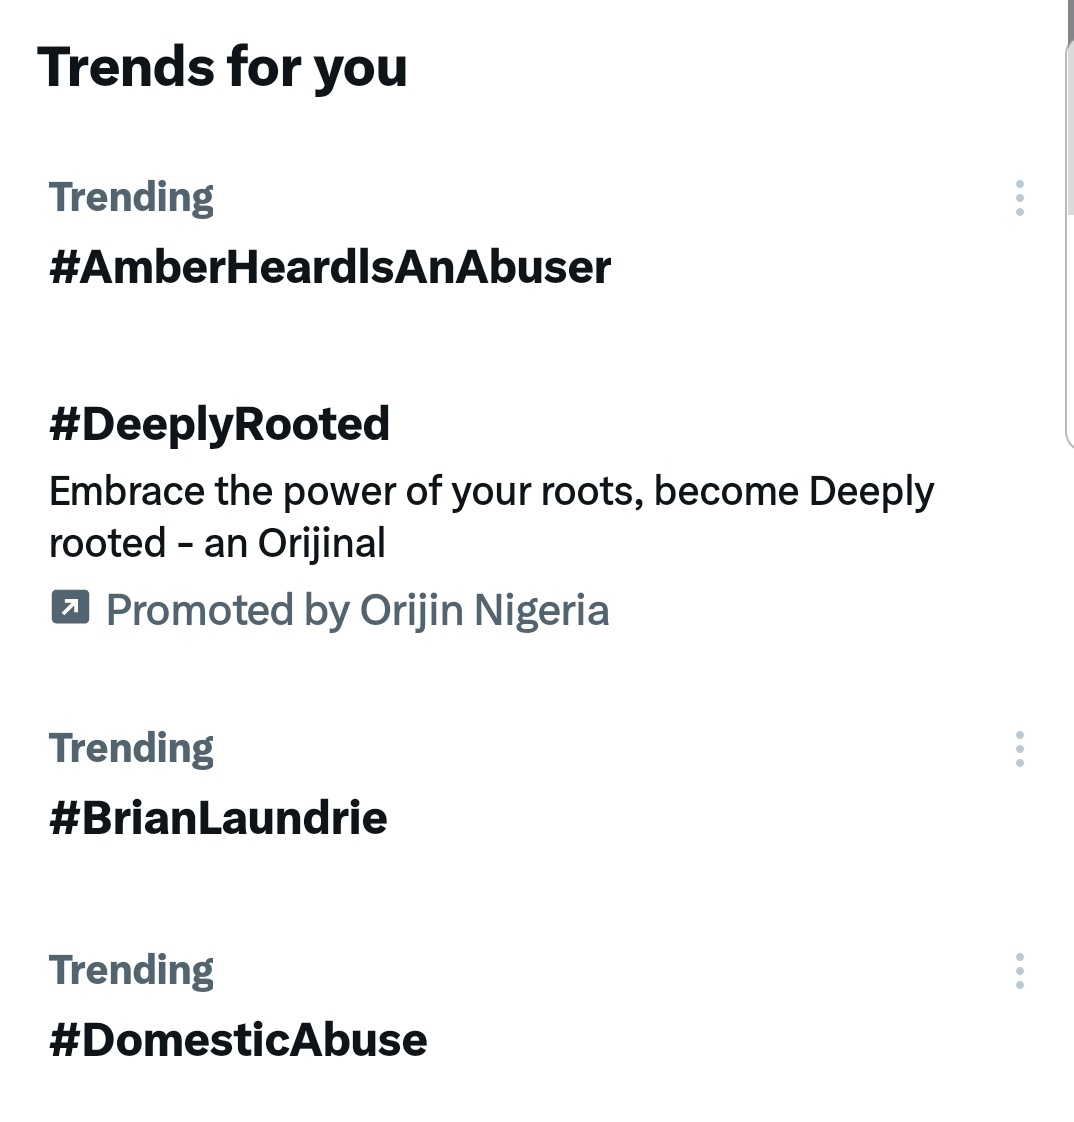 Interesting #AmberHeardIsAnAbuser, #BrianLaundrie &
#DomesticAbuse trending together.